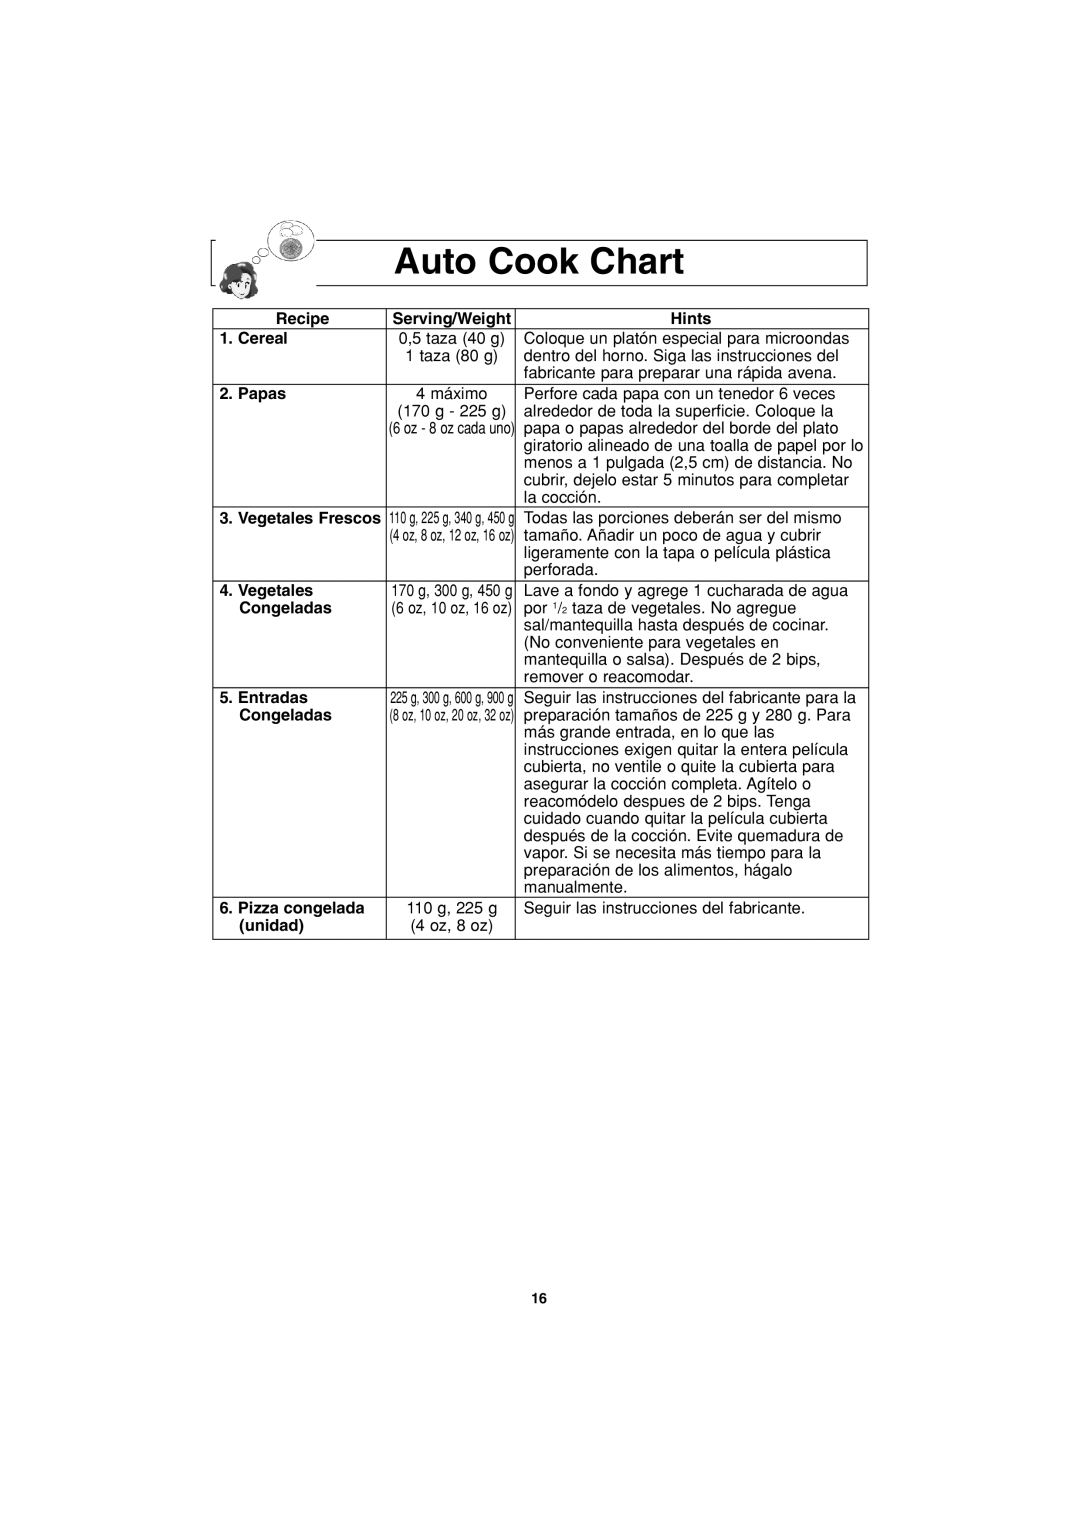 Panasonic NN-S423 Auto Cook Chart, Recipe, Serving/Weight, Hints, Cereal, Papas, Vegetales, Congeladas, Entradas, unidad 